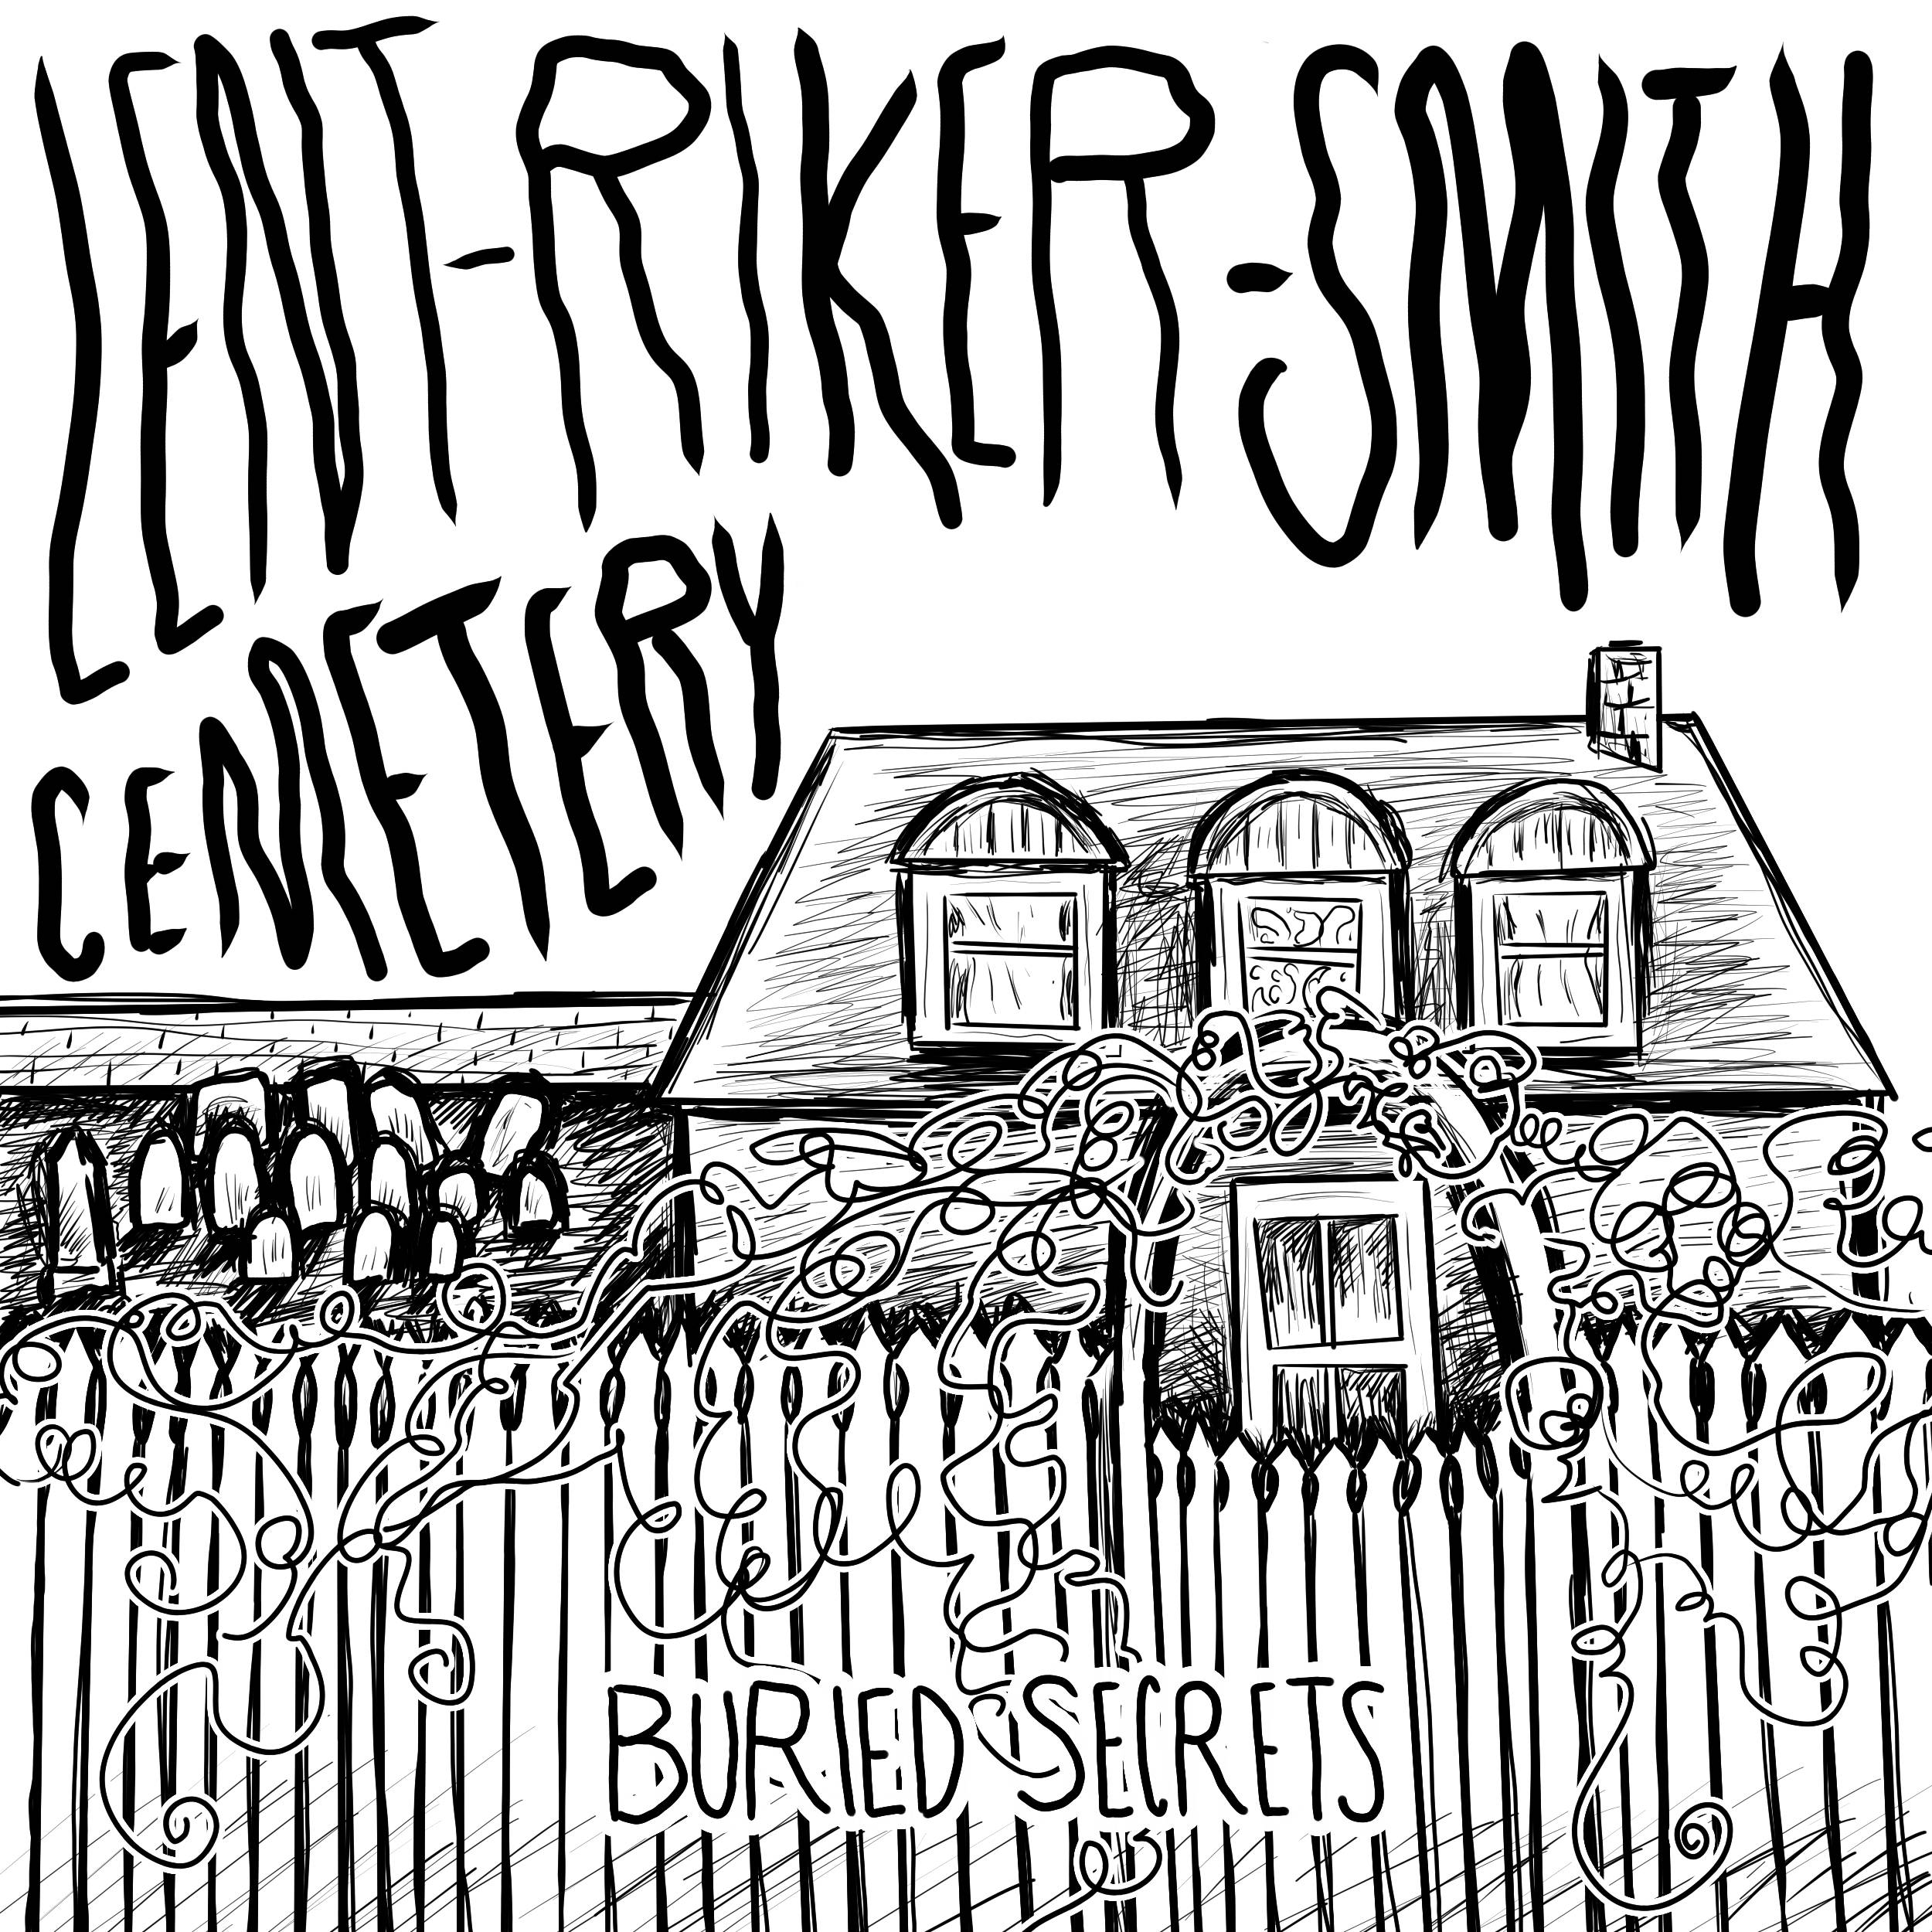 Lent-Riker-Smith Homestead and Cemetery: Part 1 (Hidden Cemeteries)